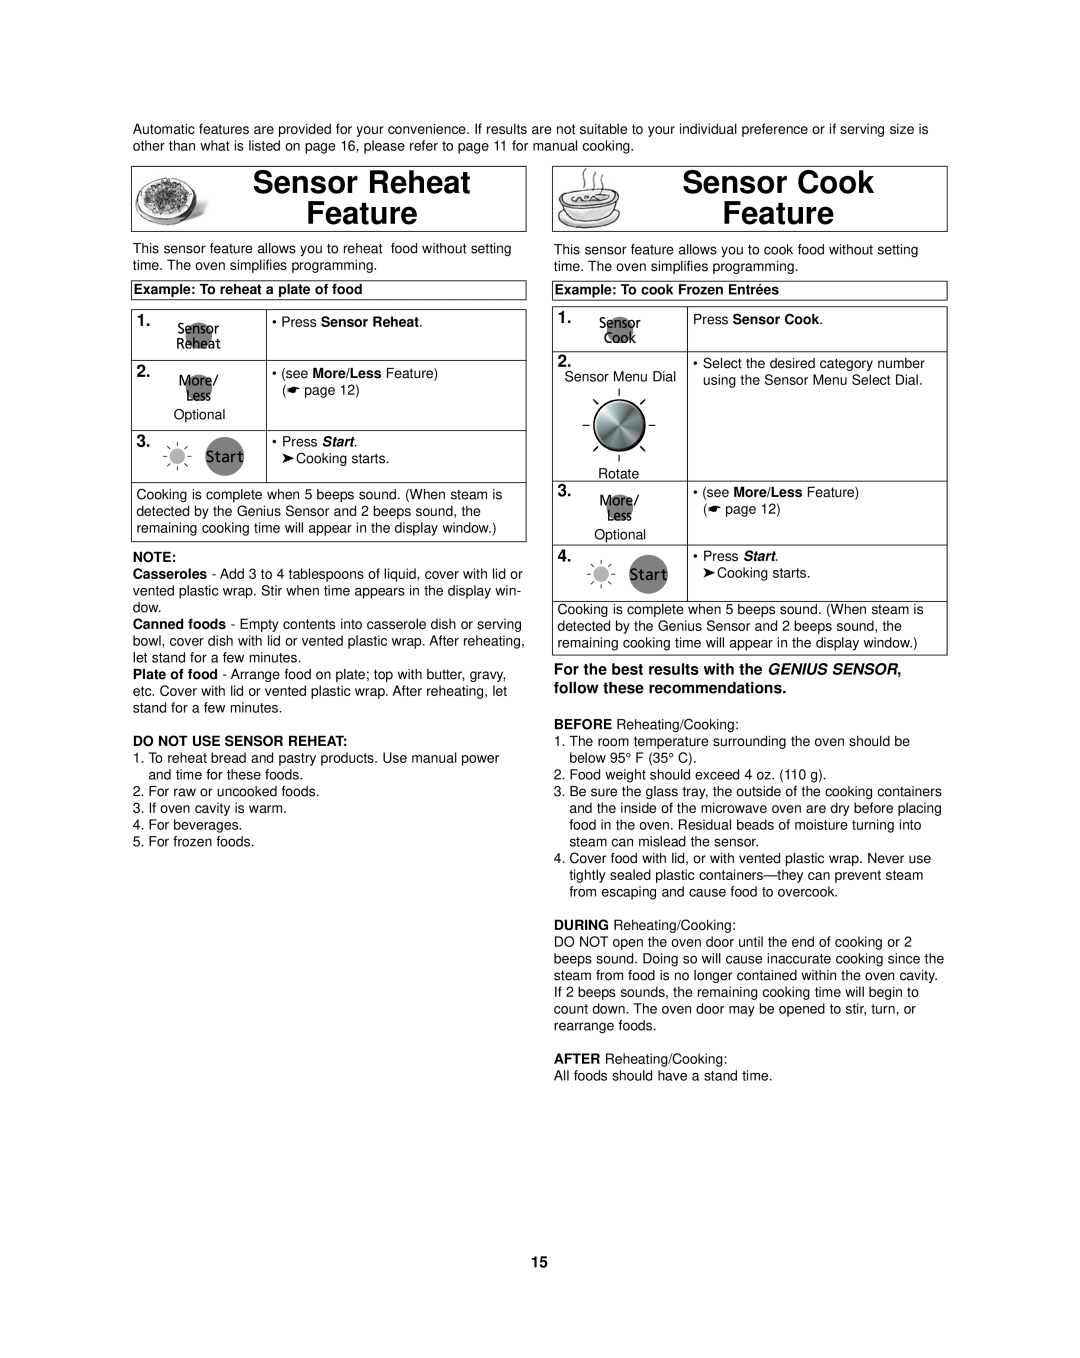 Panasonic NN-SD297SR Sensor Reheat Feature, Sensor Cook Feature, Example To reheat a plate of food, Press Sensor Reheat 